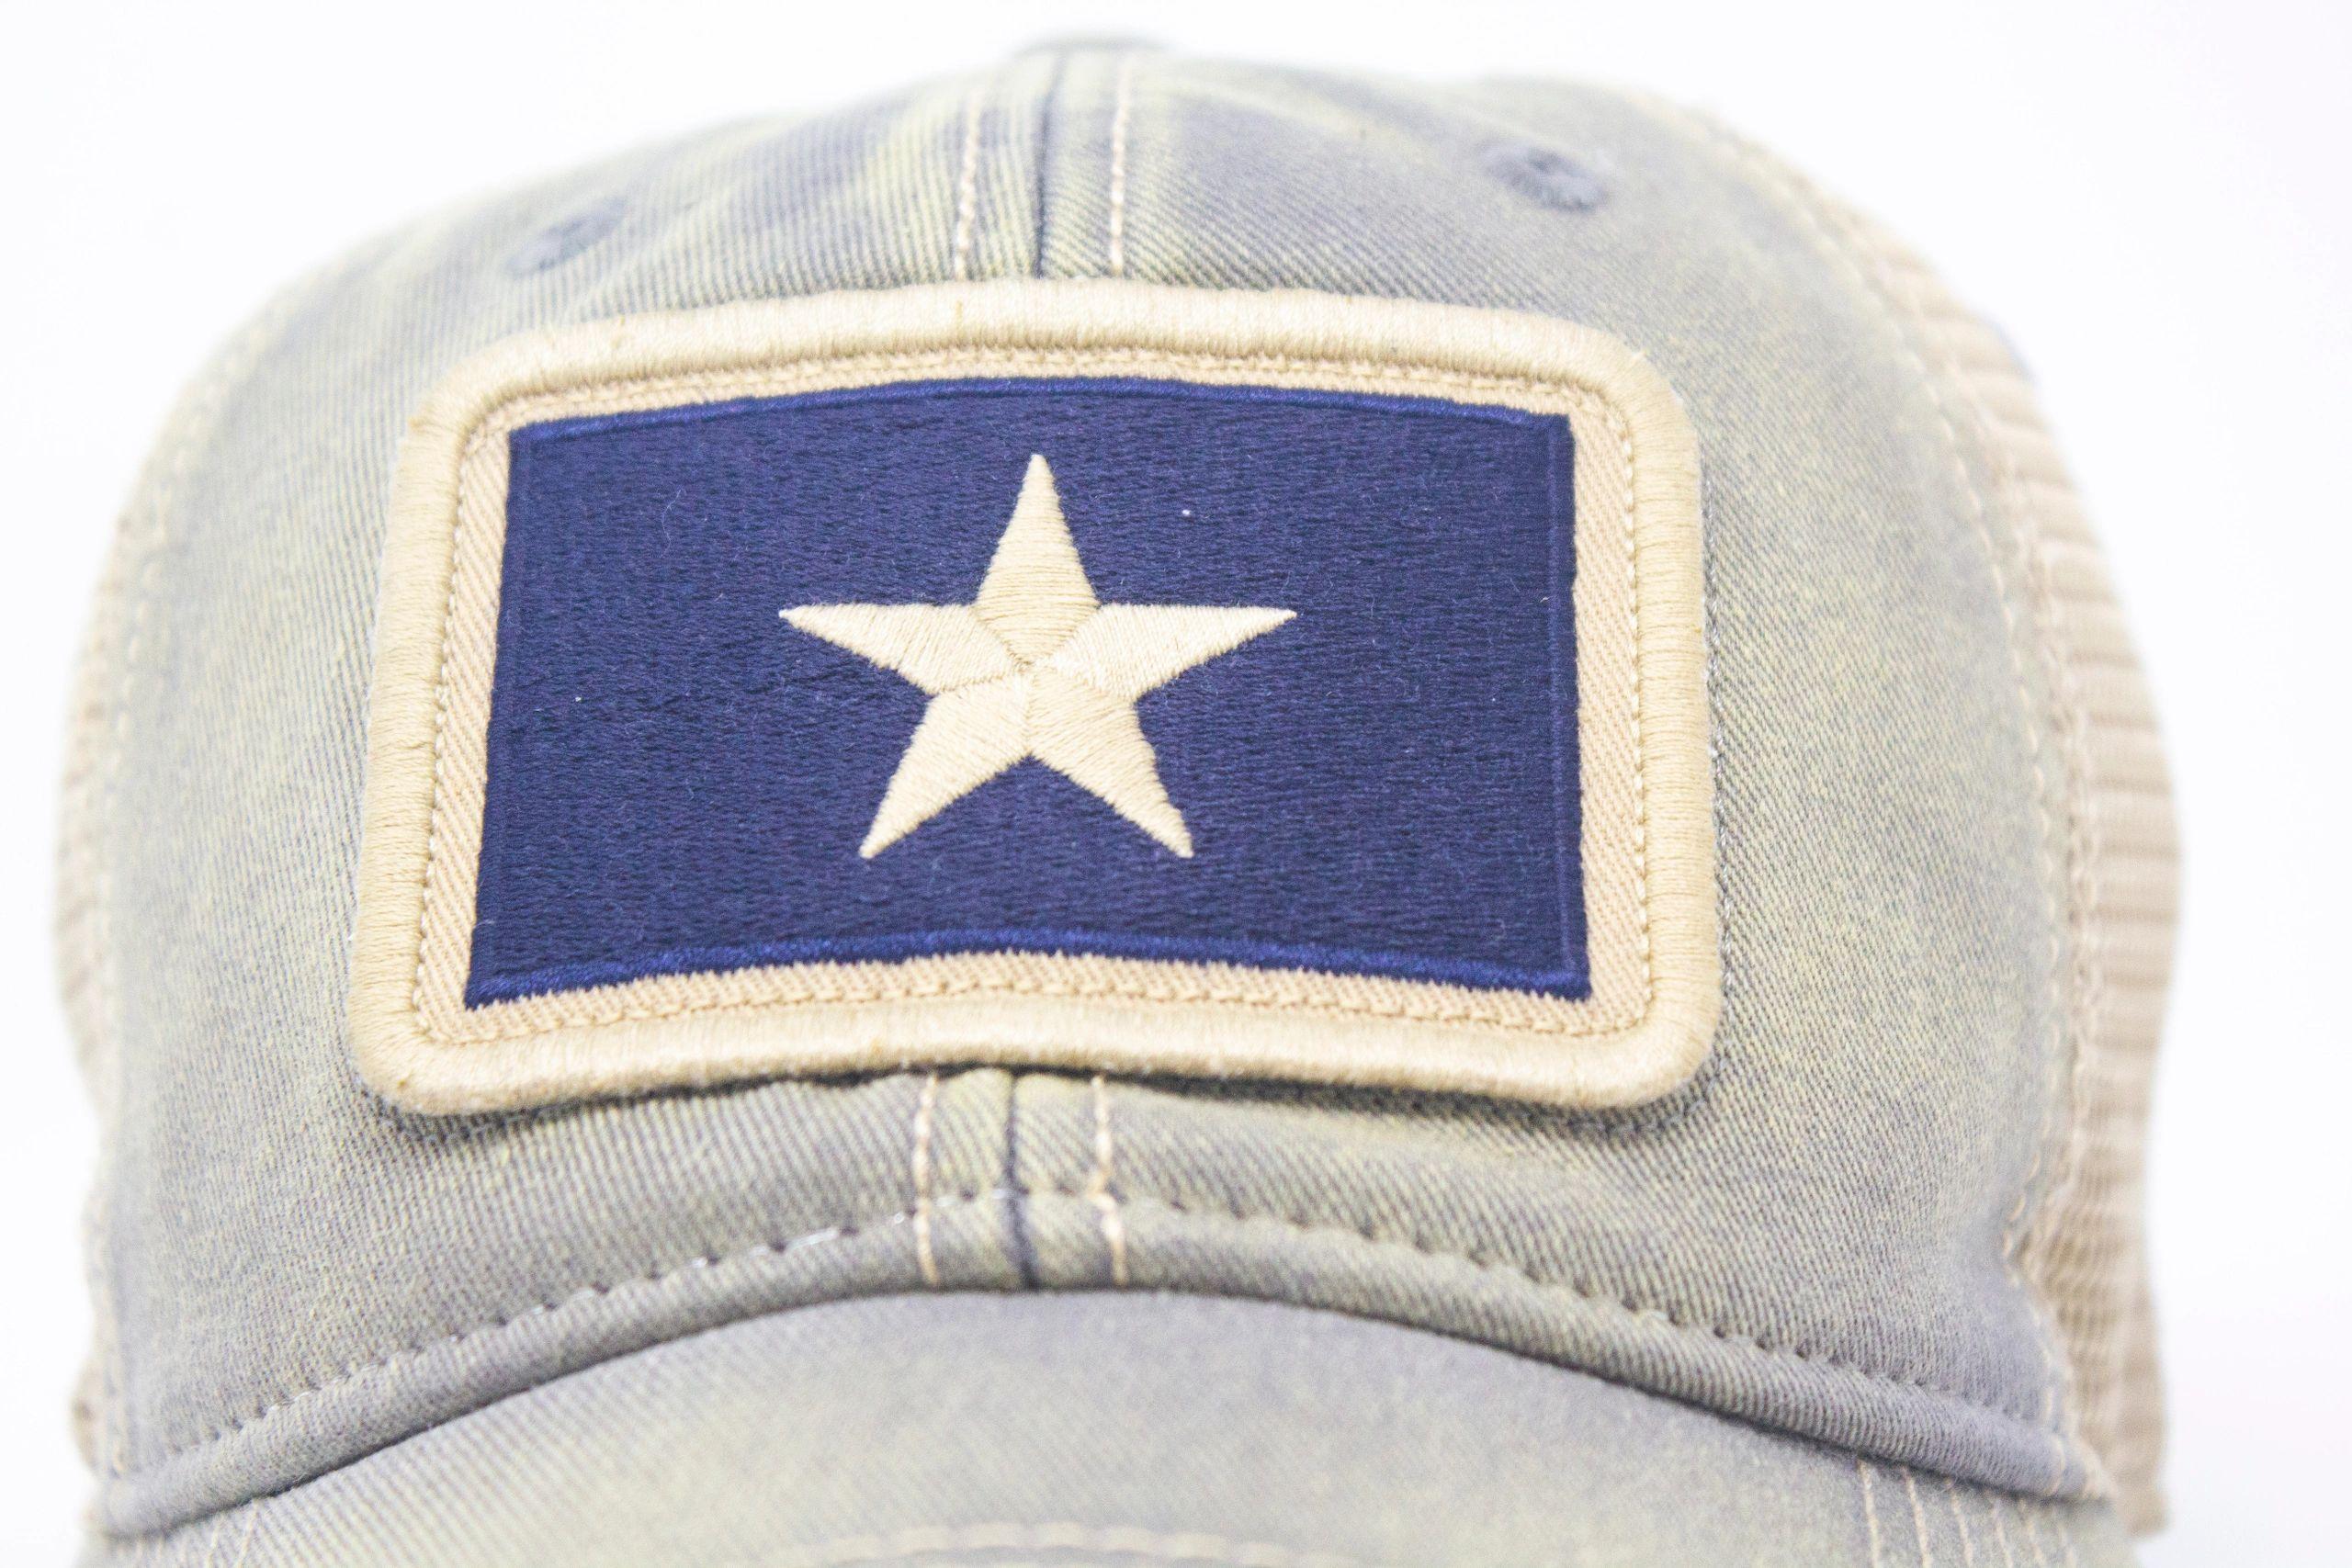 Bonnie Blue and Republic of West Florida Trucker Hat